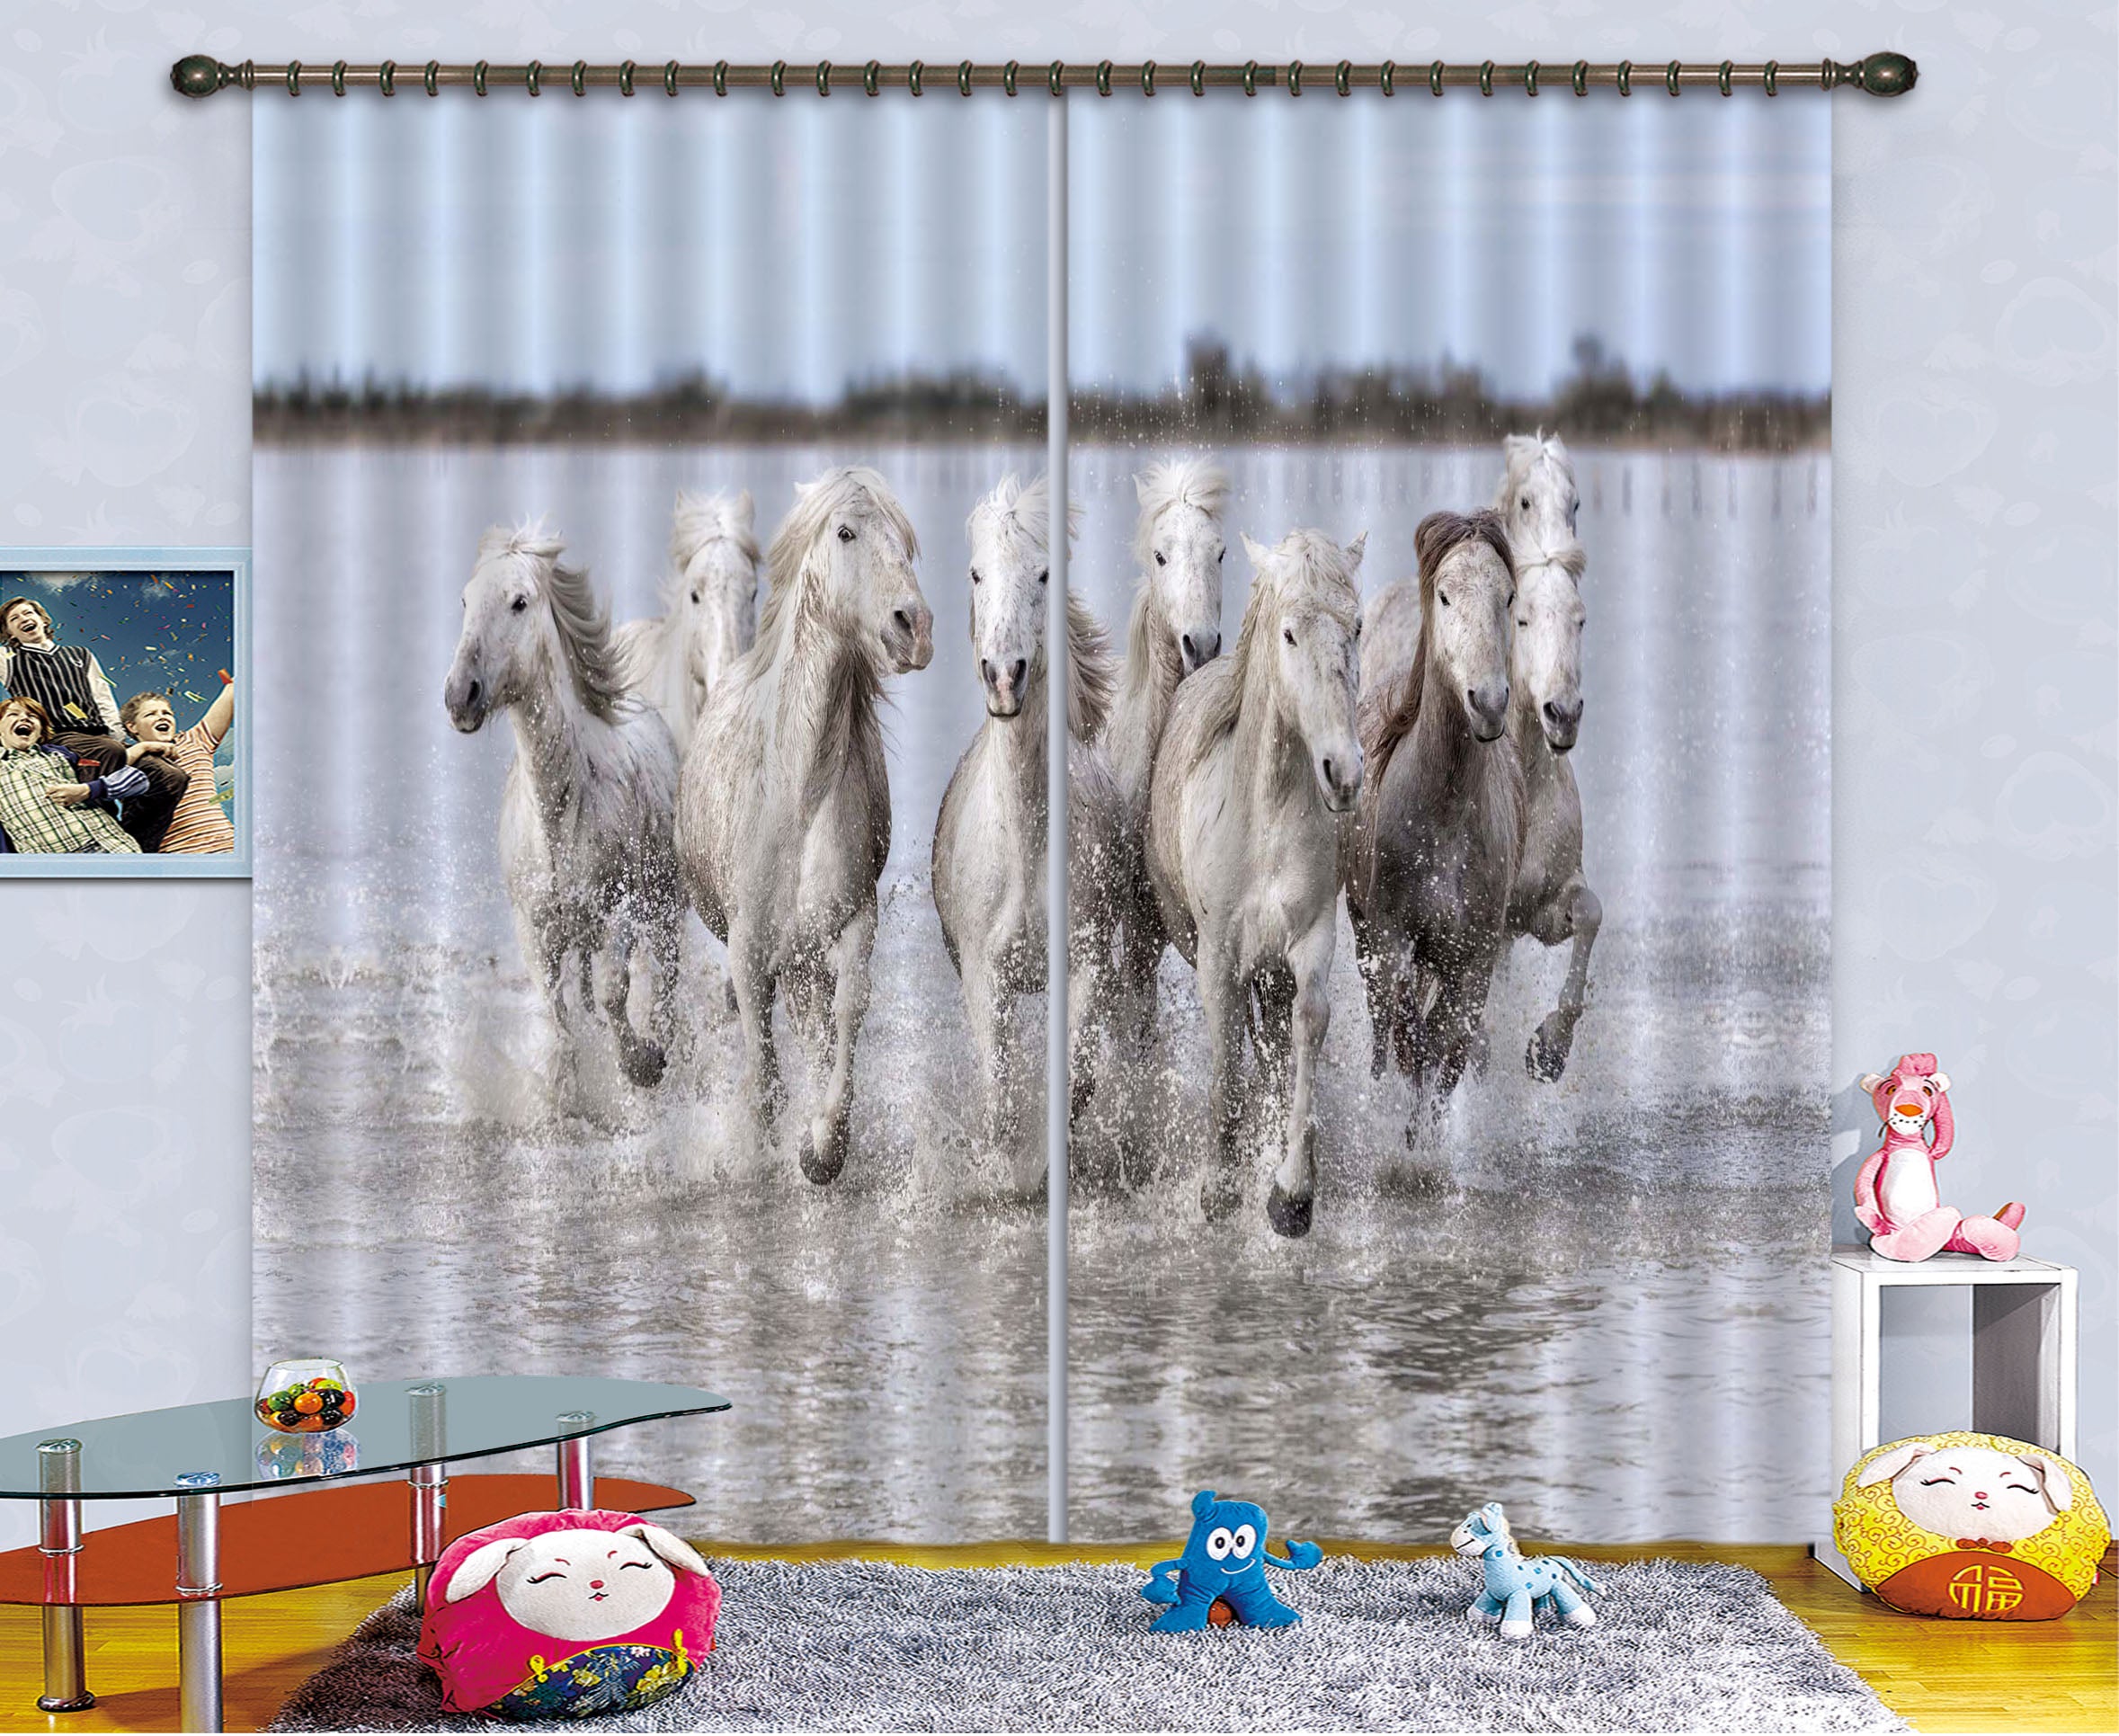 3D White Horse 069 Marco Carmassi Curtain Curtains Drapes